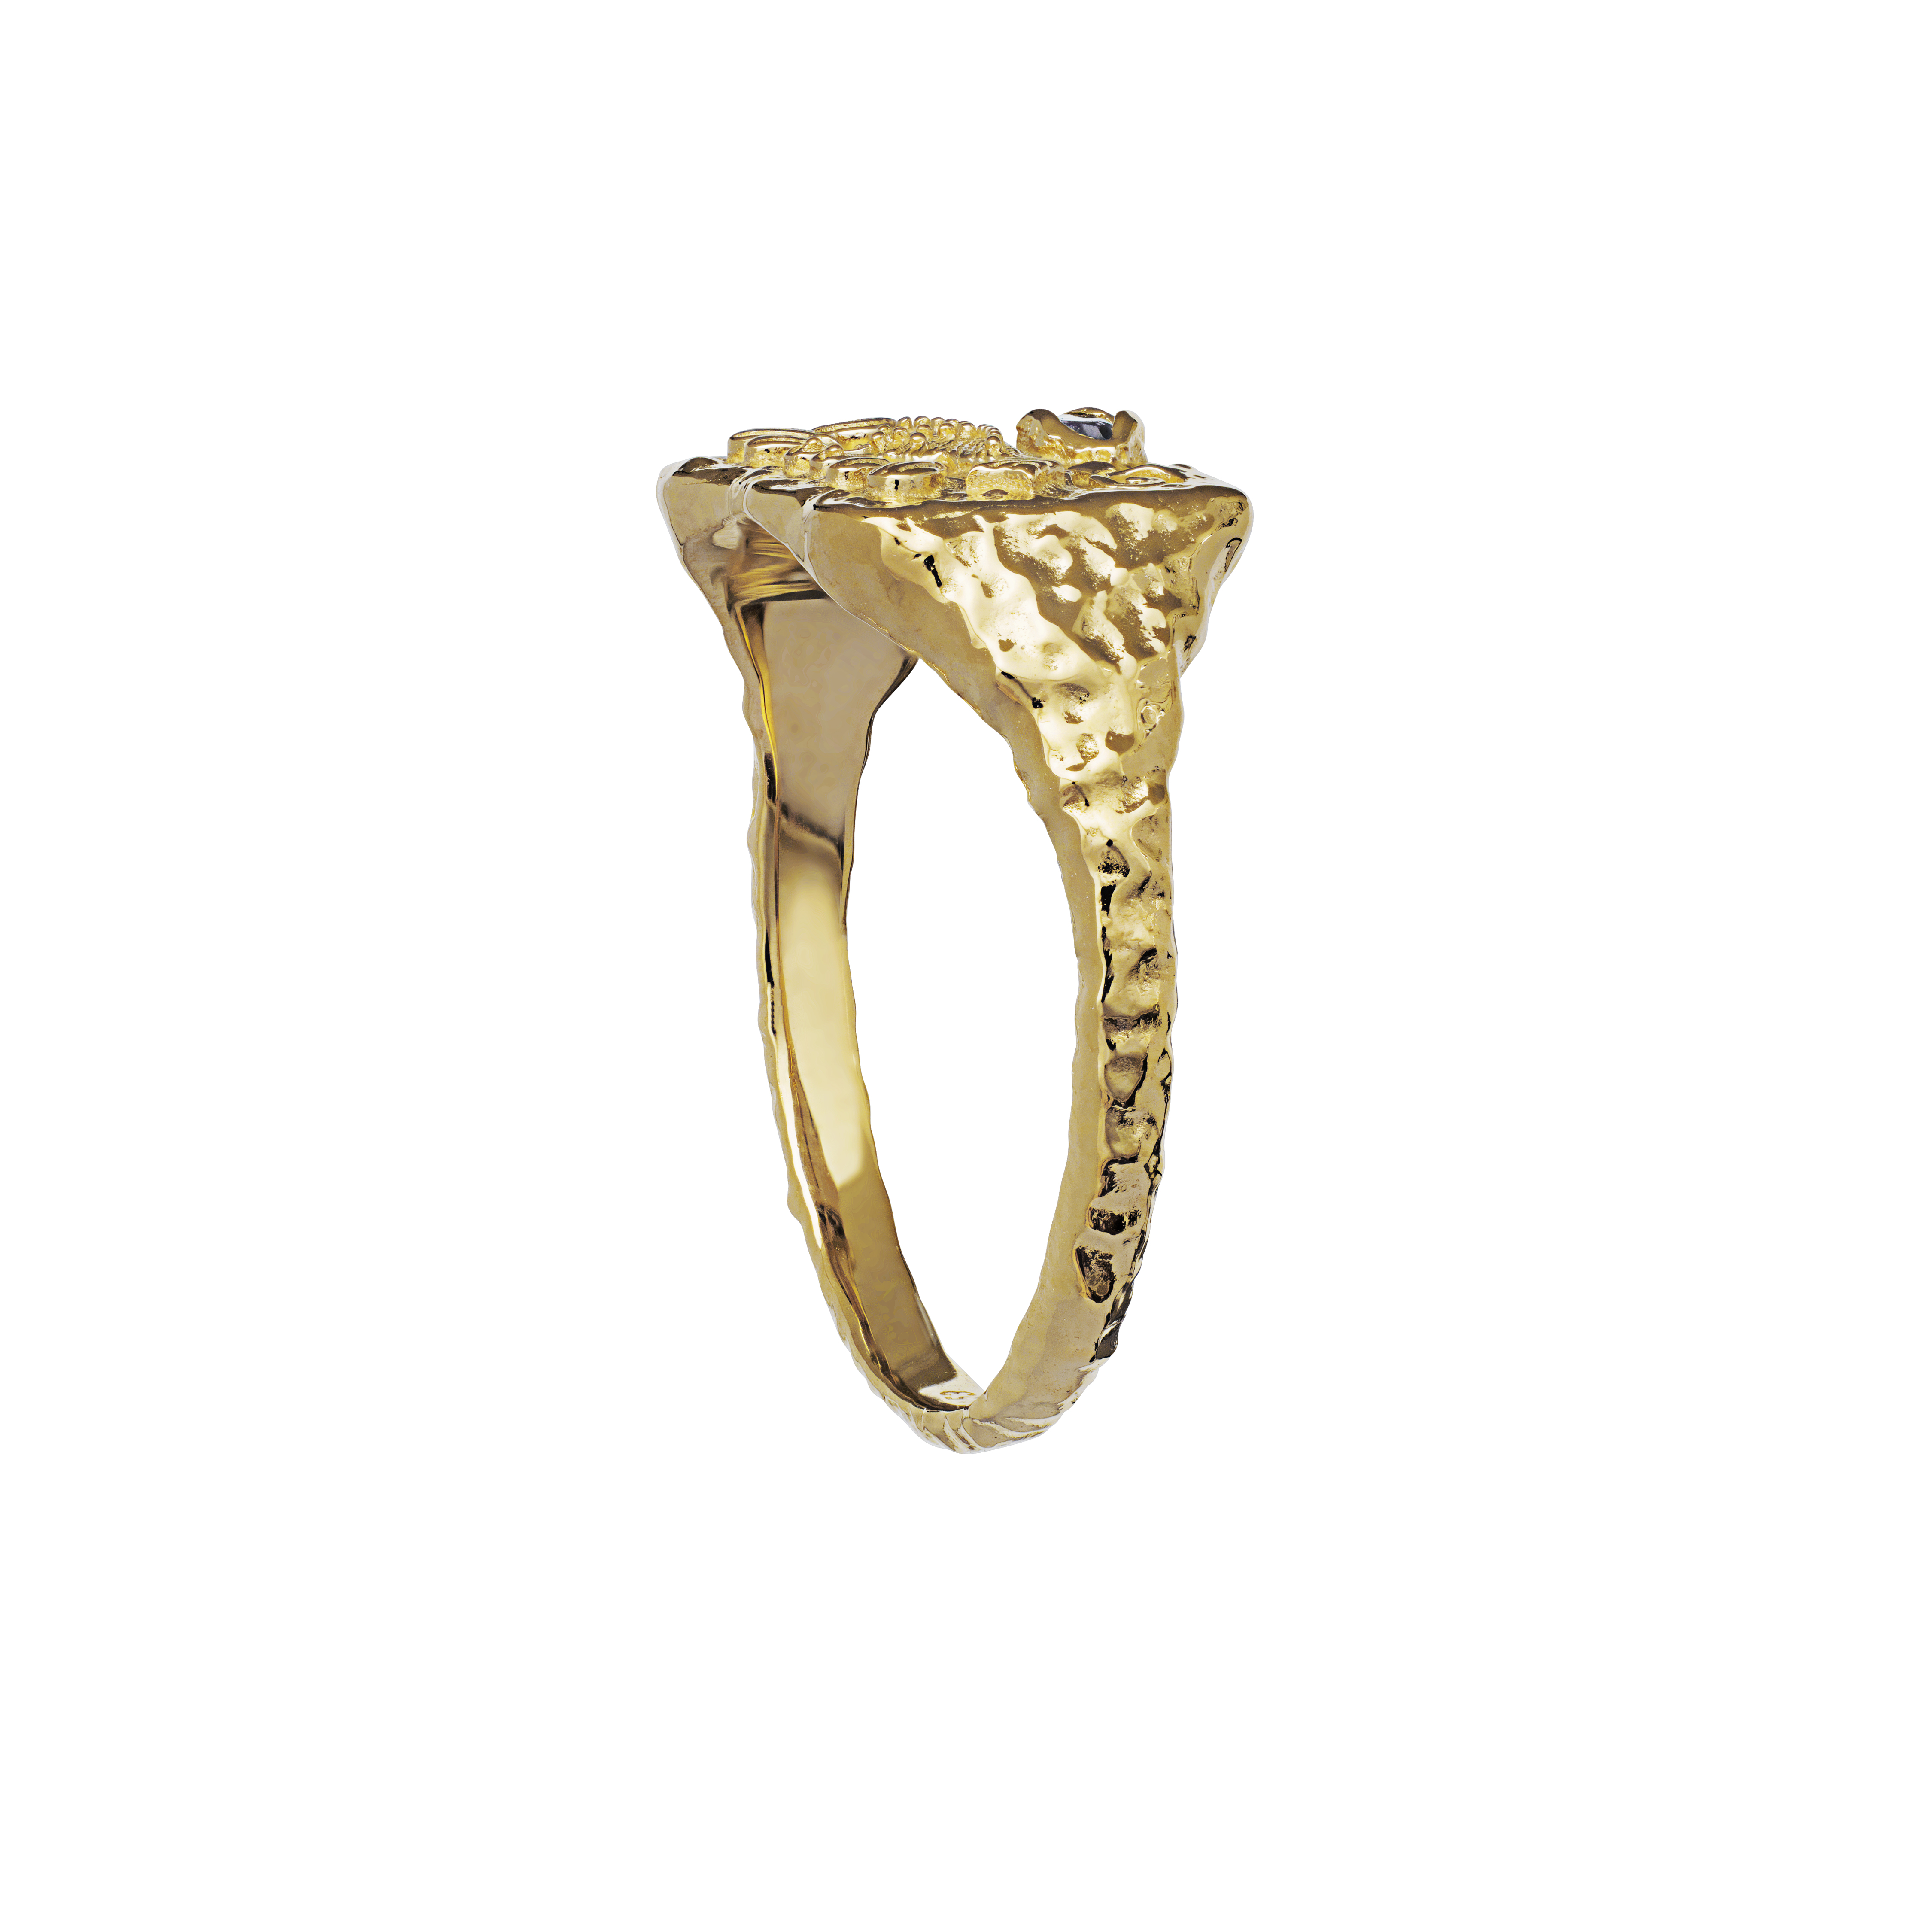  Gry Ring, Guld, 51